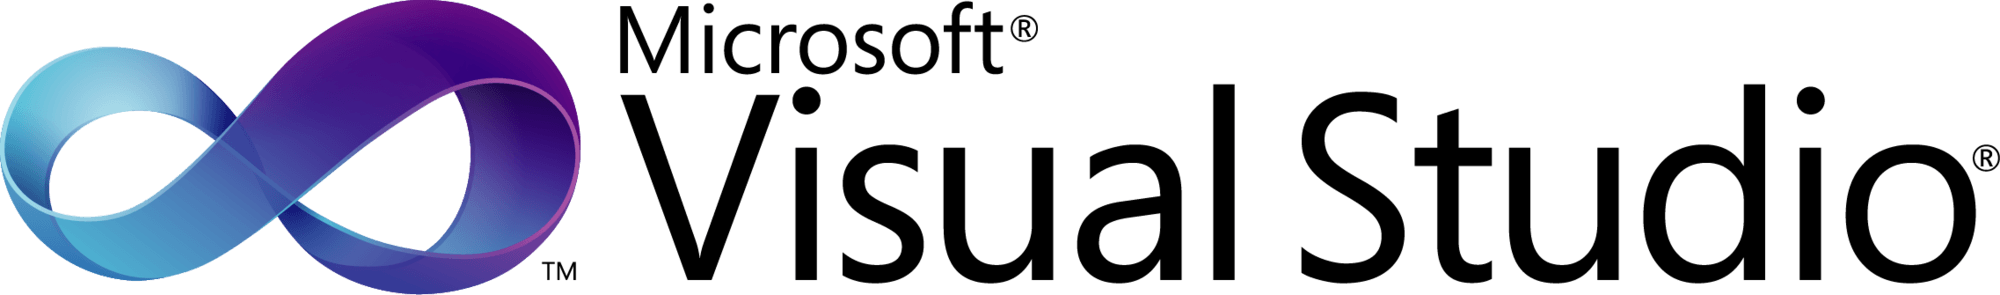 Microsoft Visual Studio Logo - Microsoft Visual Studio | Logopedia | FANDOM powered by Wikia